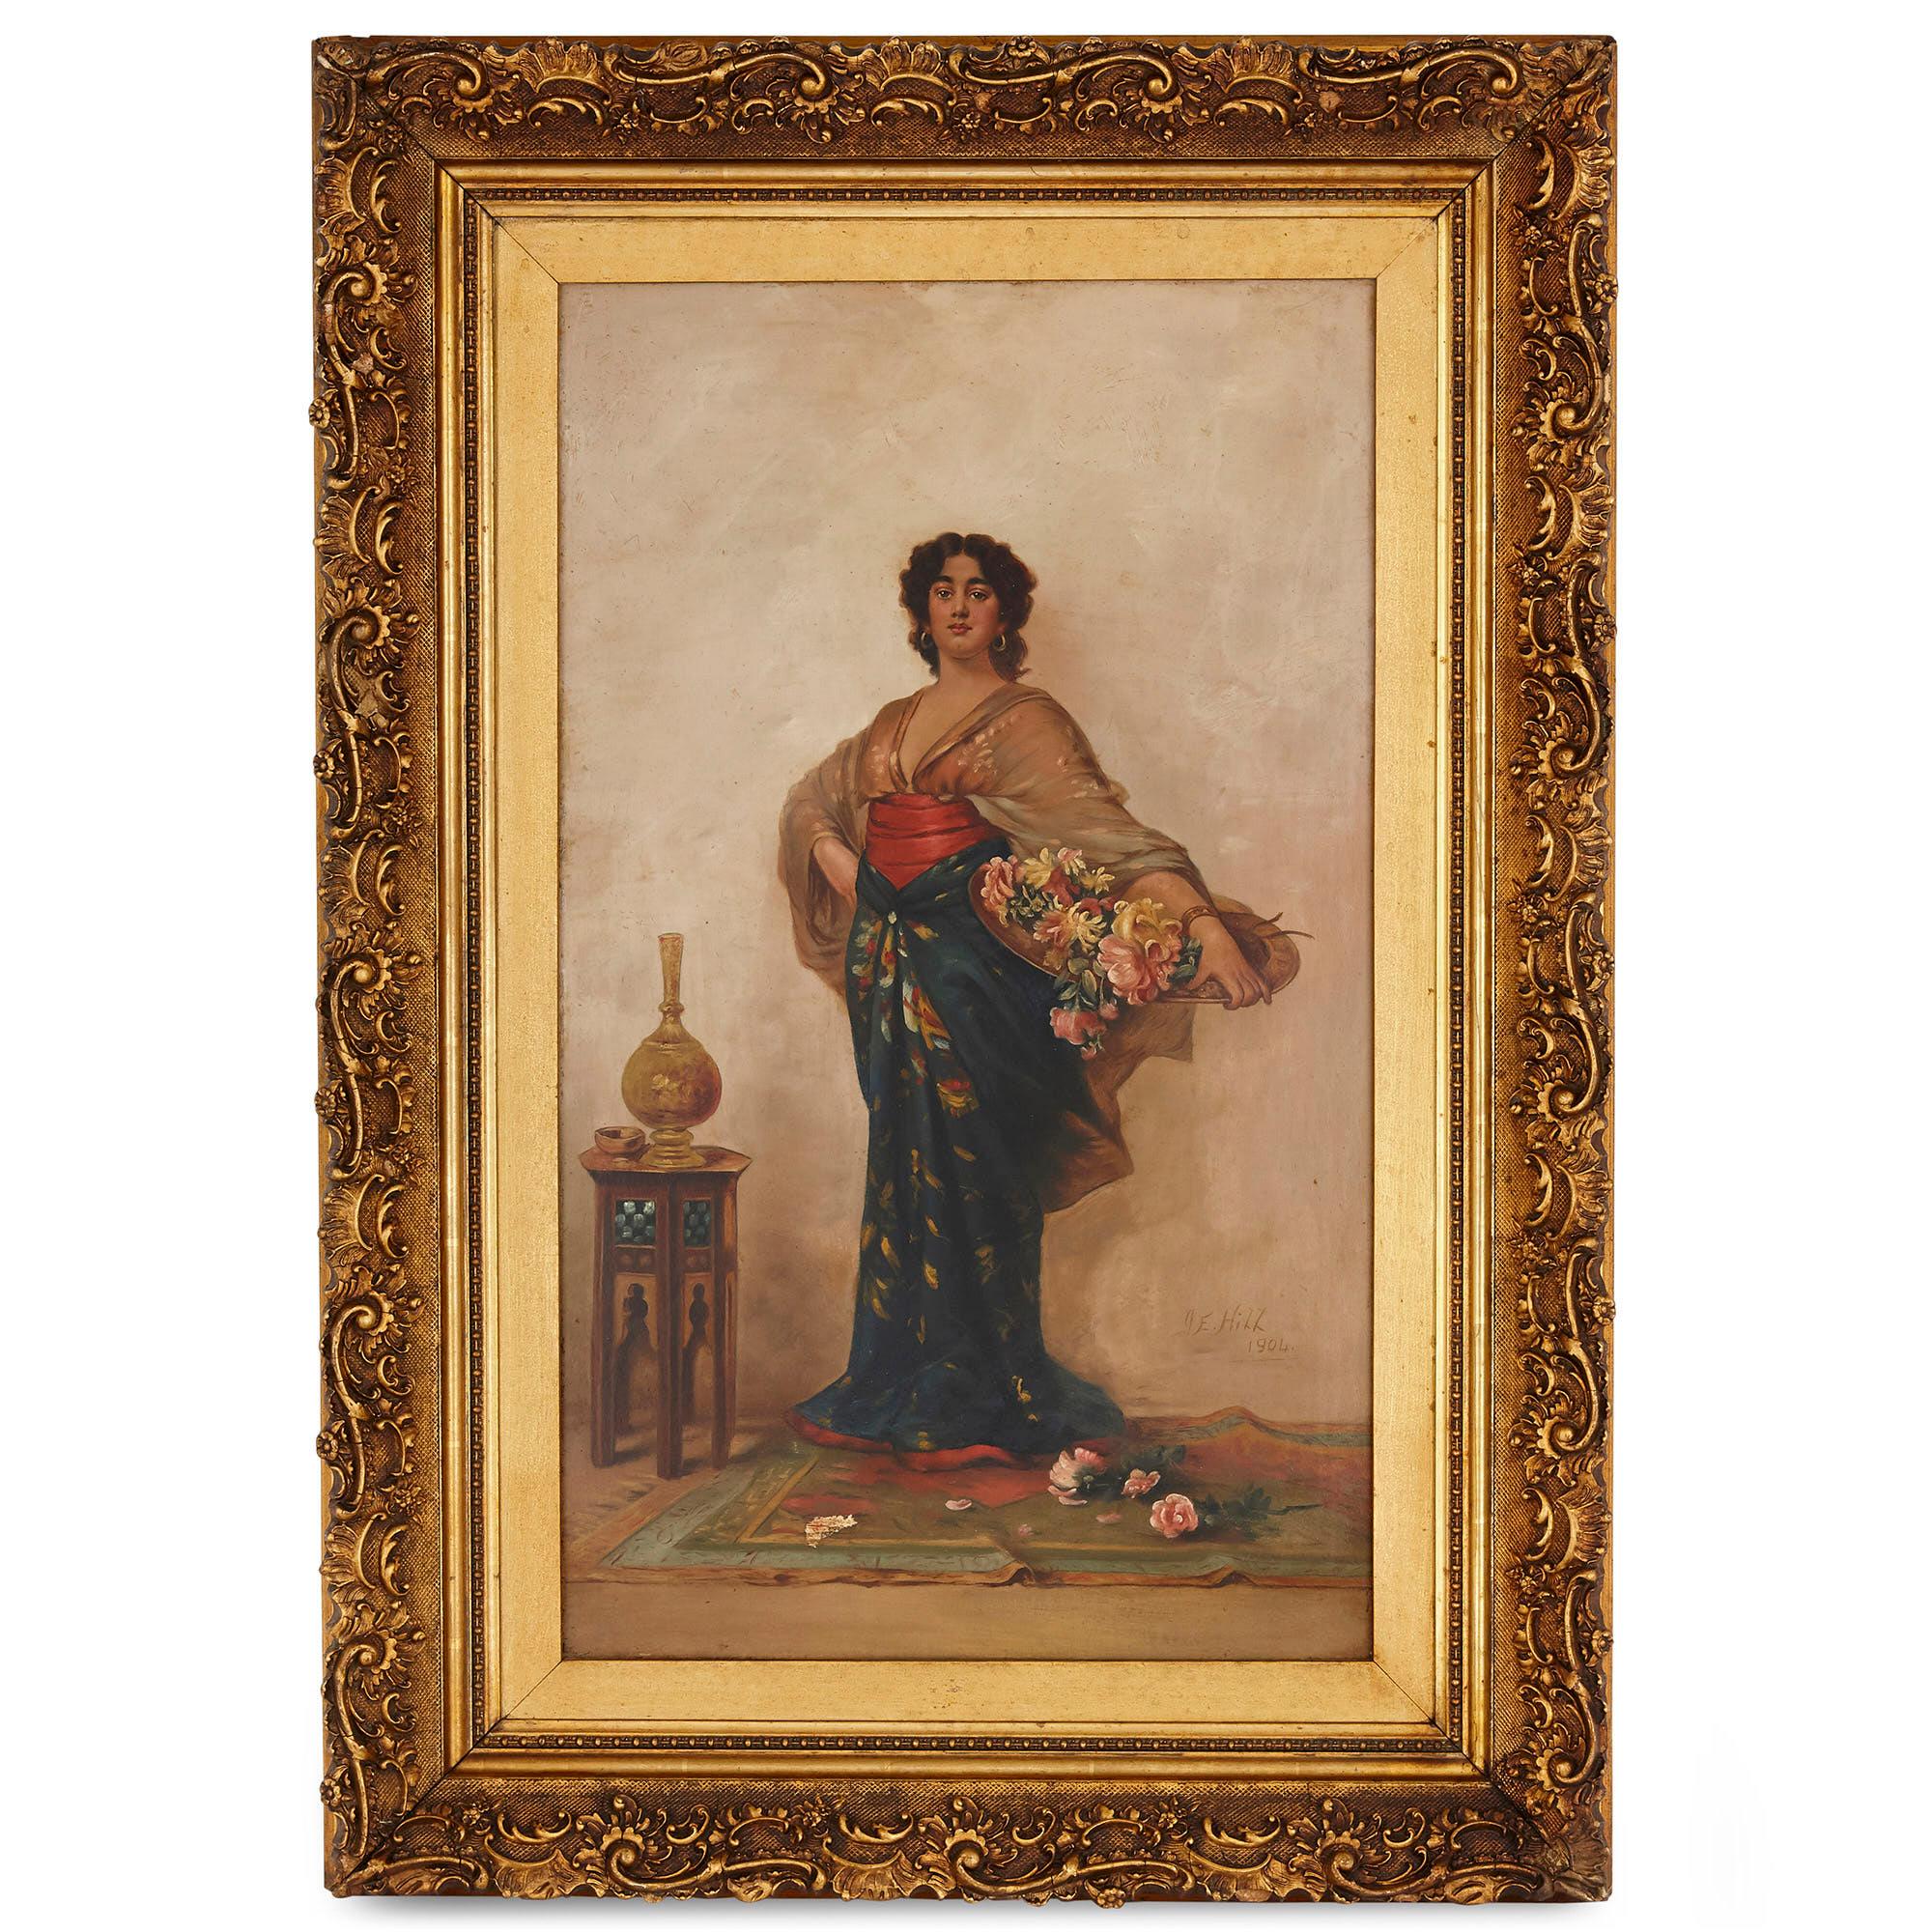 Pair of figurative Orientalist oil paintings by Hill - Brown Figurative Painting by J. E. Hill